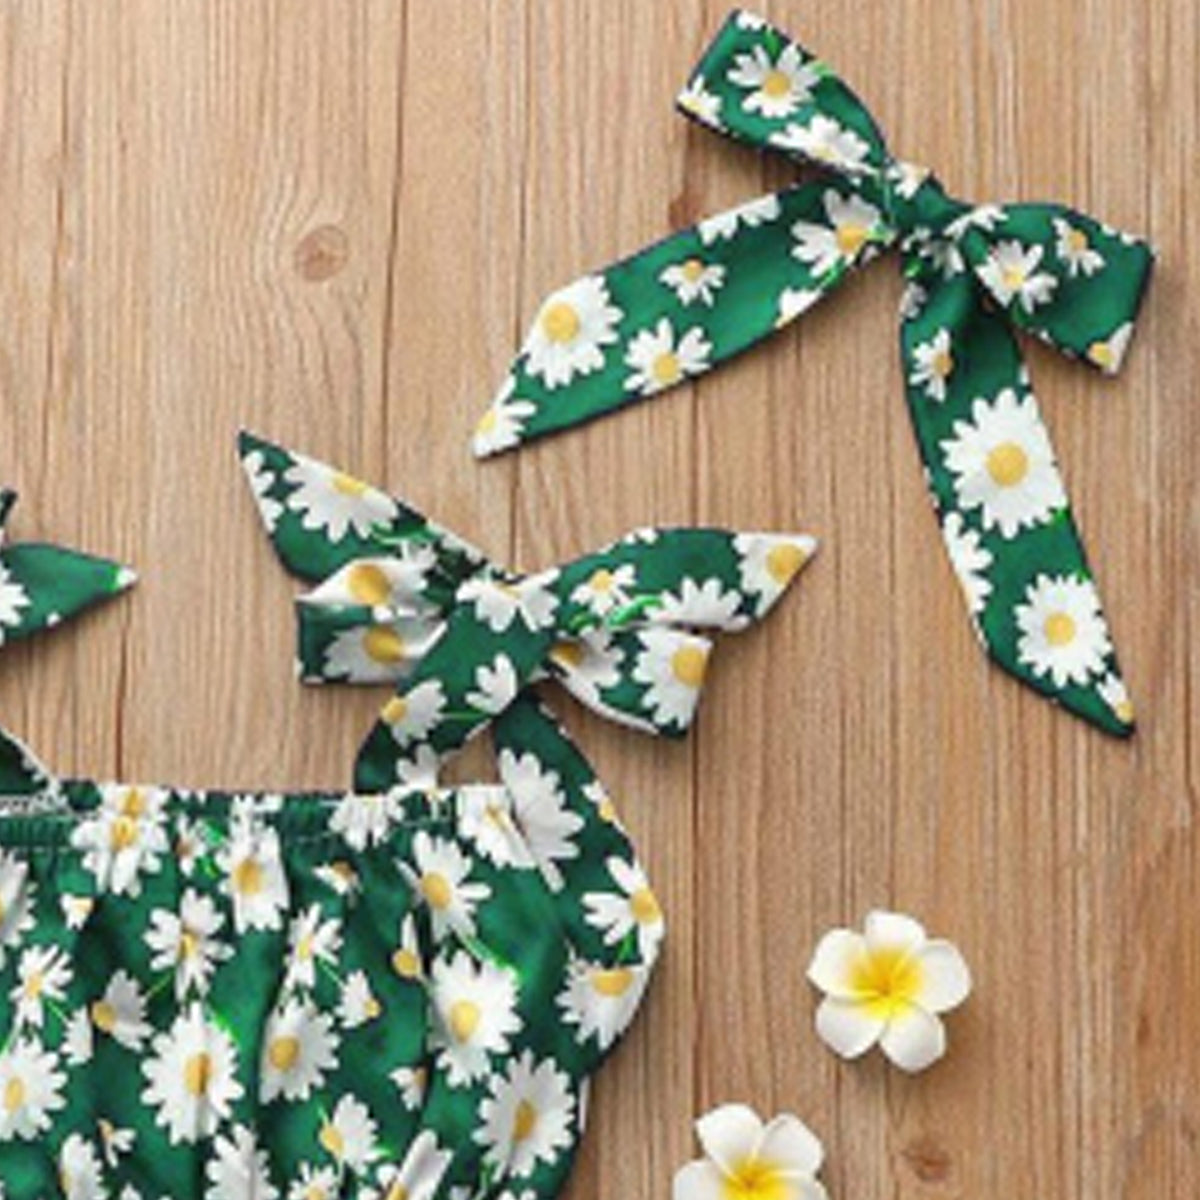 Kids Ditsy Floral Crop Cami Top & Frilled Skirt Set For Baby Girls